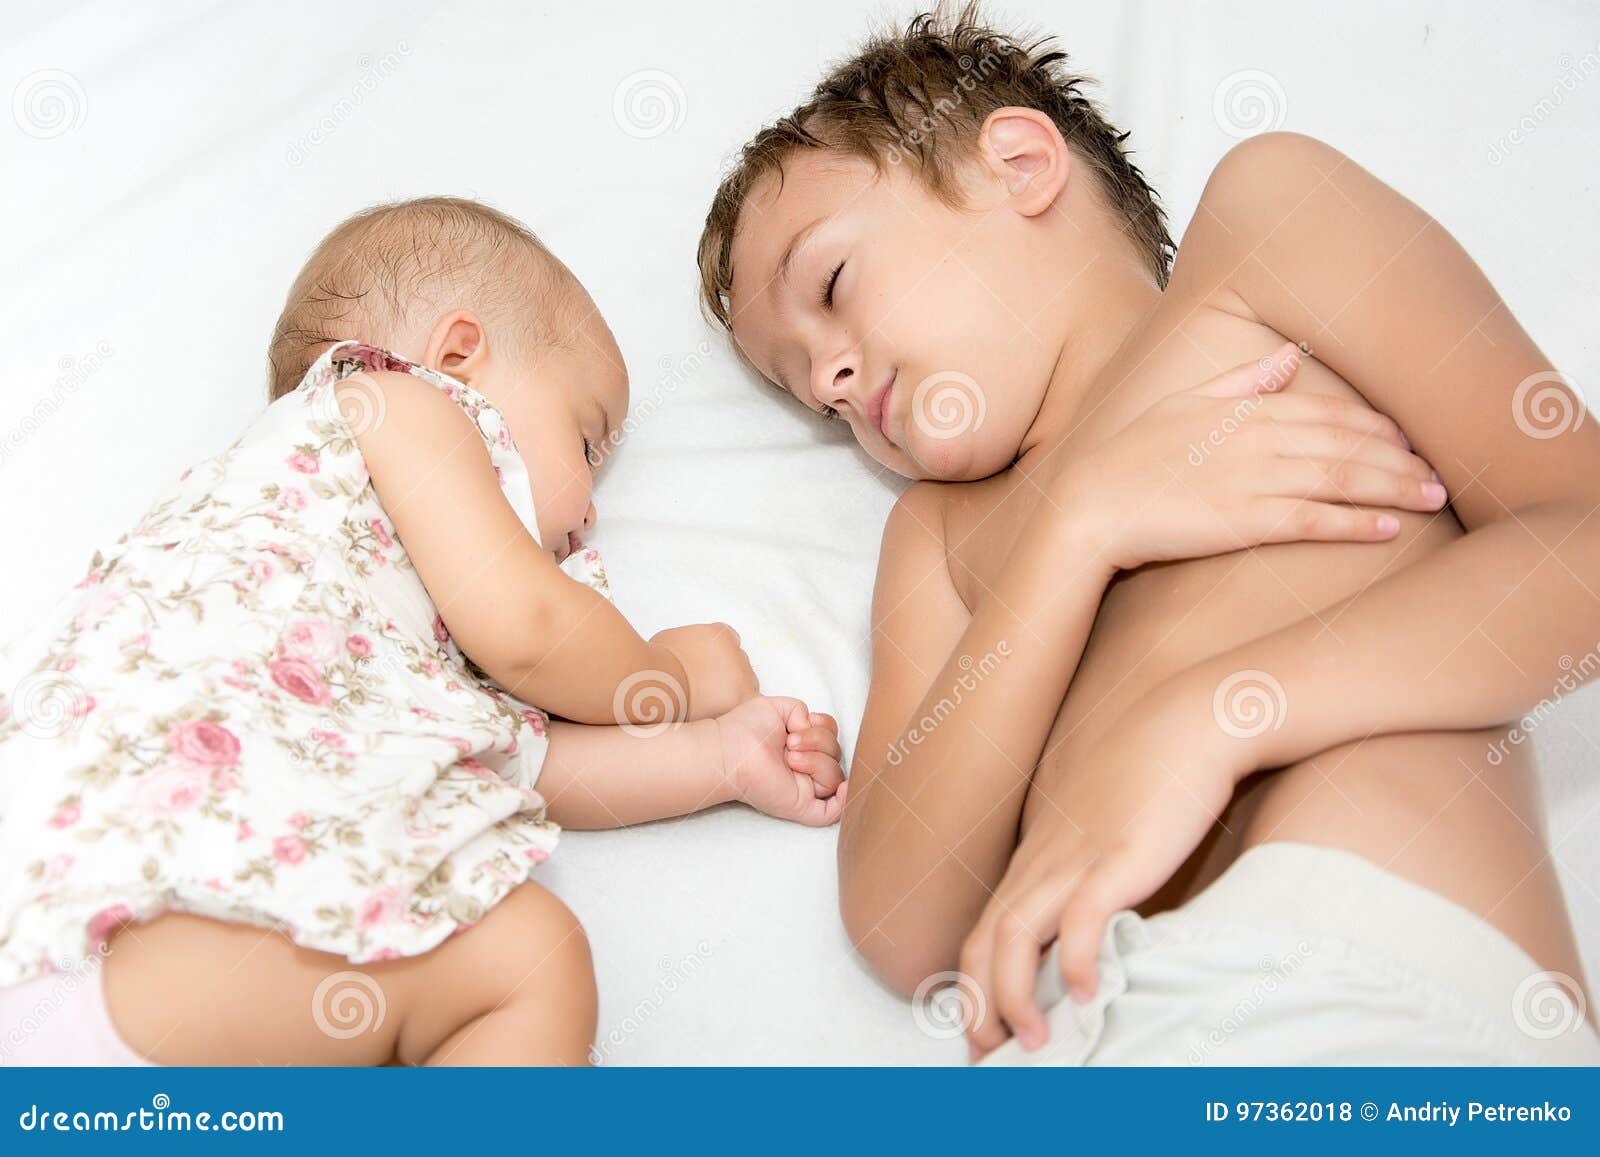 albert nassif share brother and sleeping sister photos